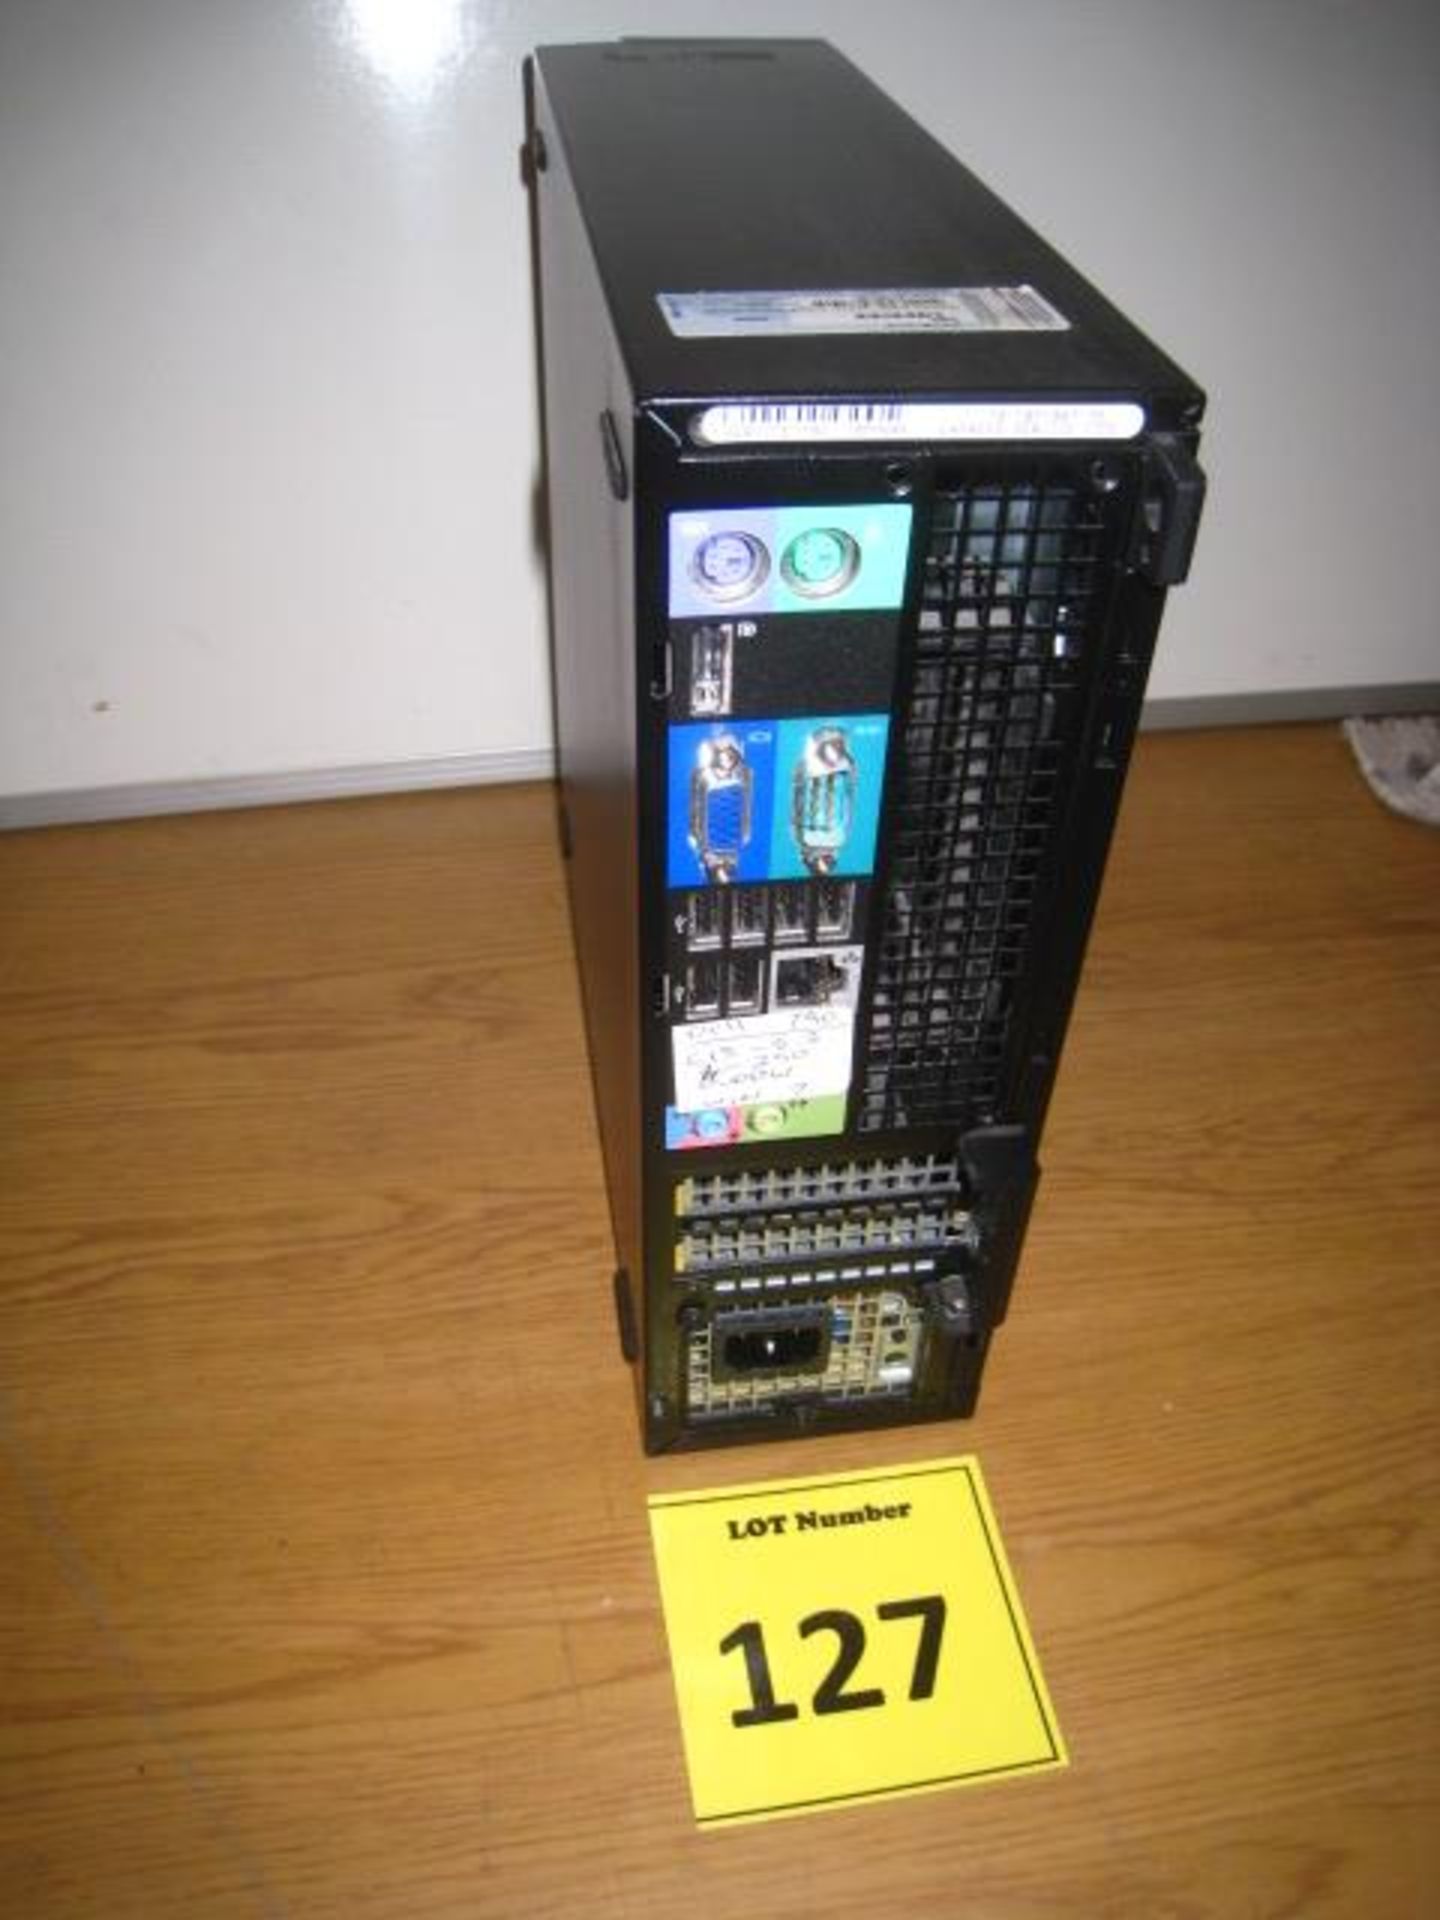 DELL 790 SMALL FORM FACTOR COMPUTER. CORE i3 3.3GHZ PROCESSOR, 4GB RAM, 250GB HDD, DVDRW. WINDOWS - Image 2 of 2